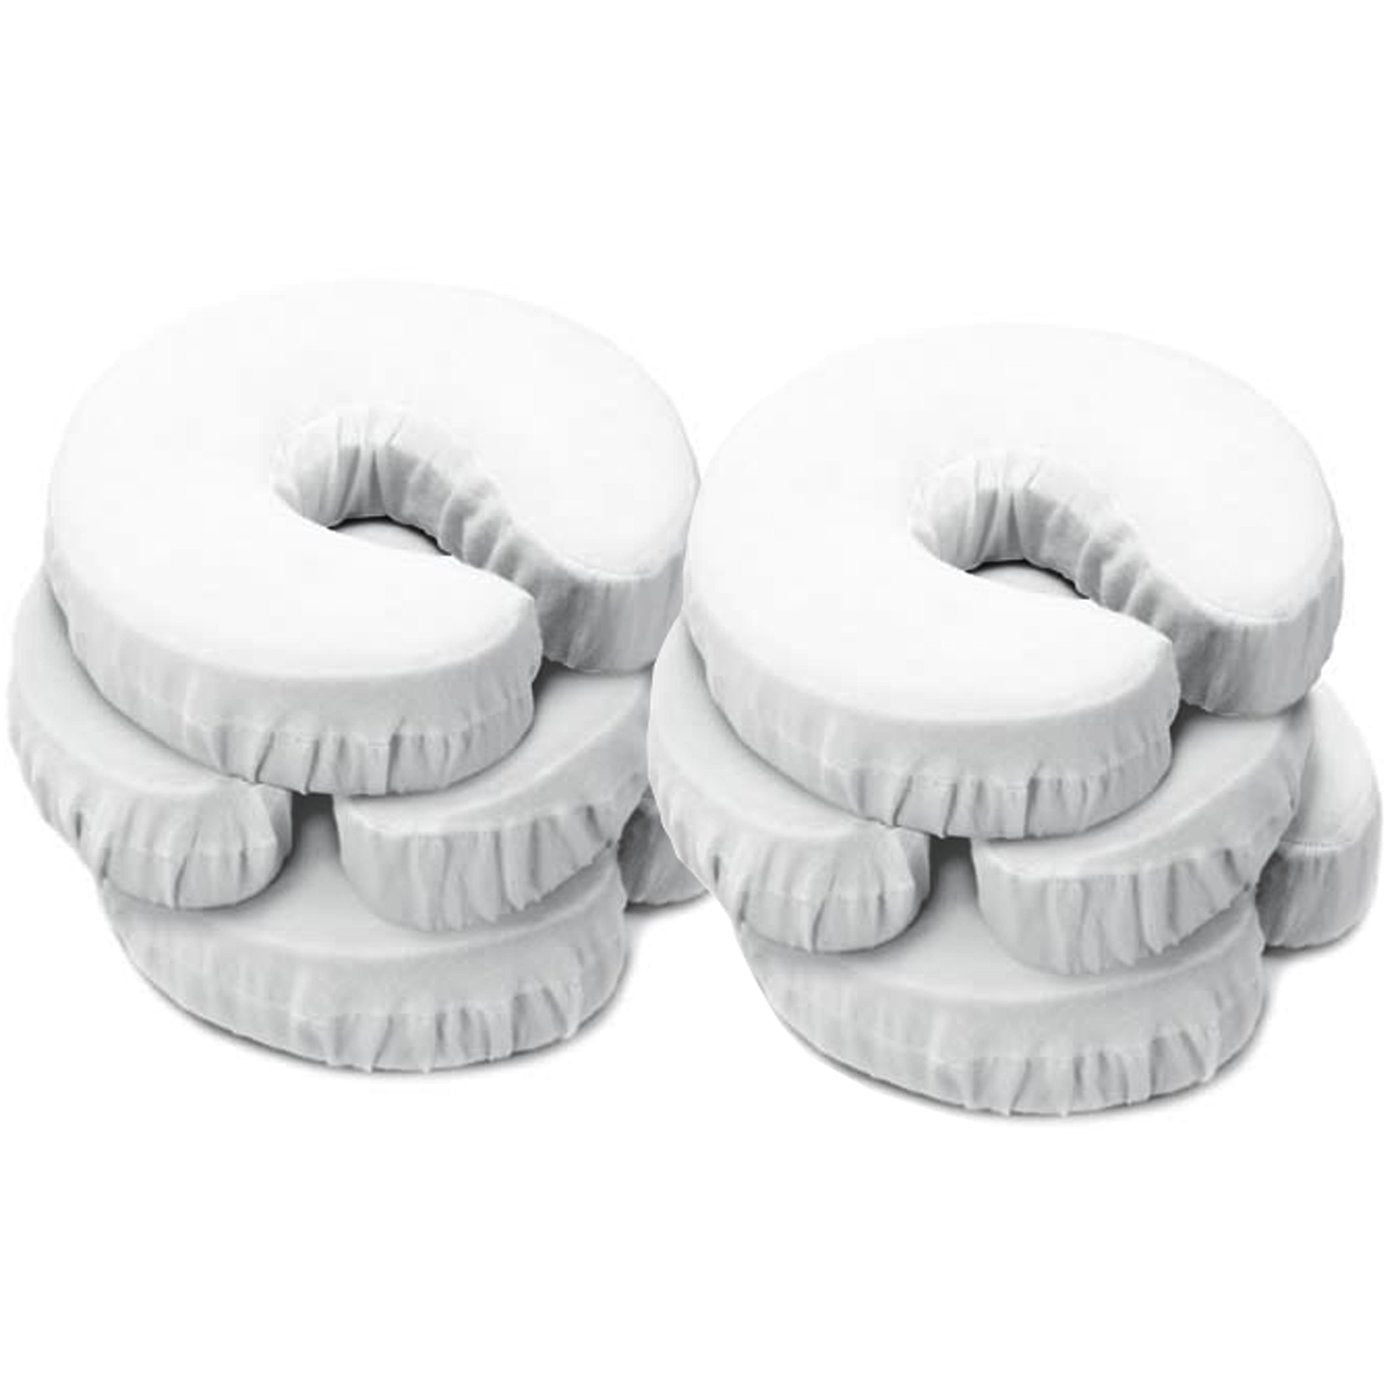 Bella2bello Universal Face Pillow Cushion Cradle Headrest Covers, 6 Pack, Cream, 100% all cotton, Machine Washable